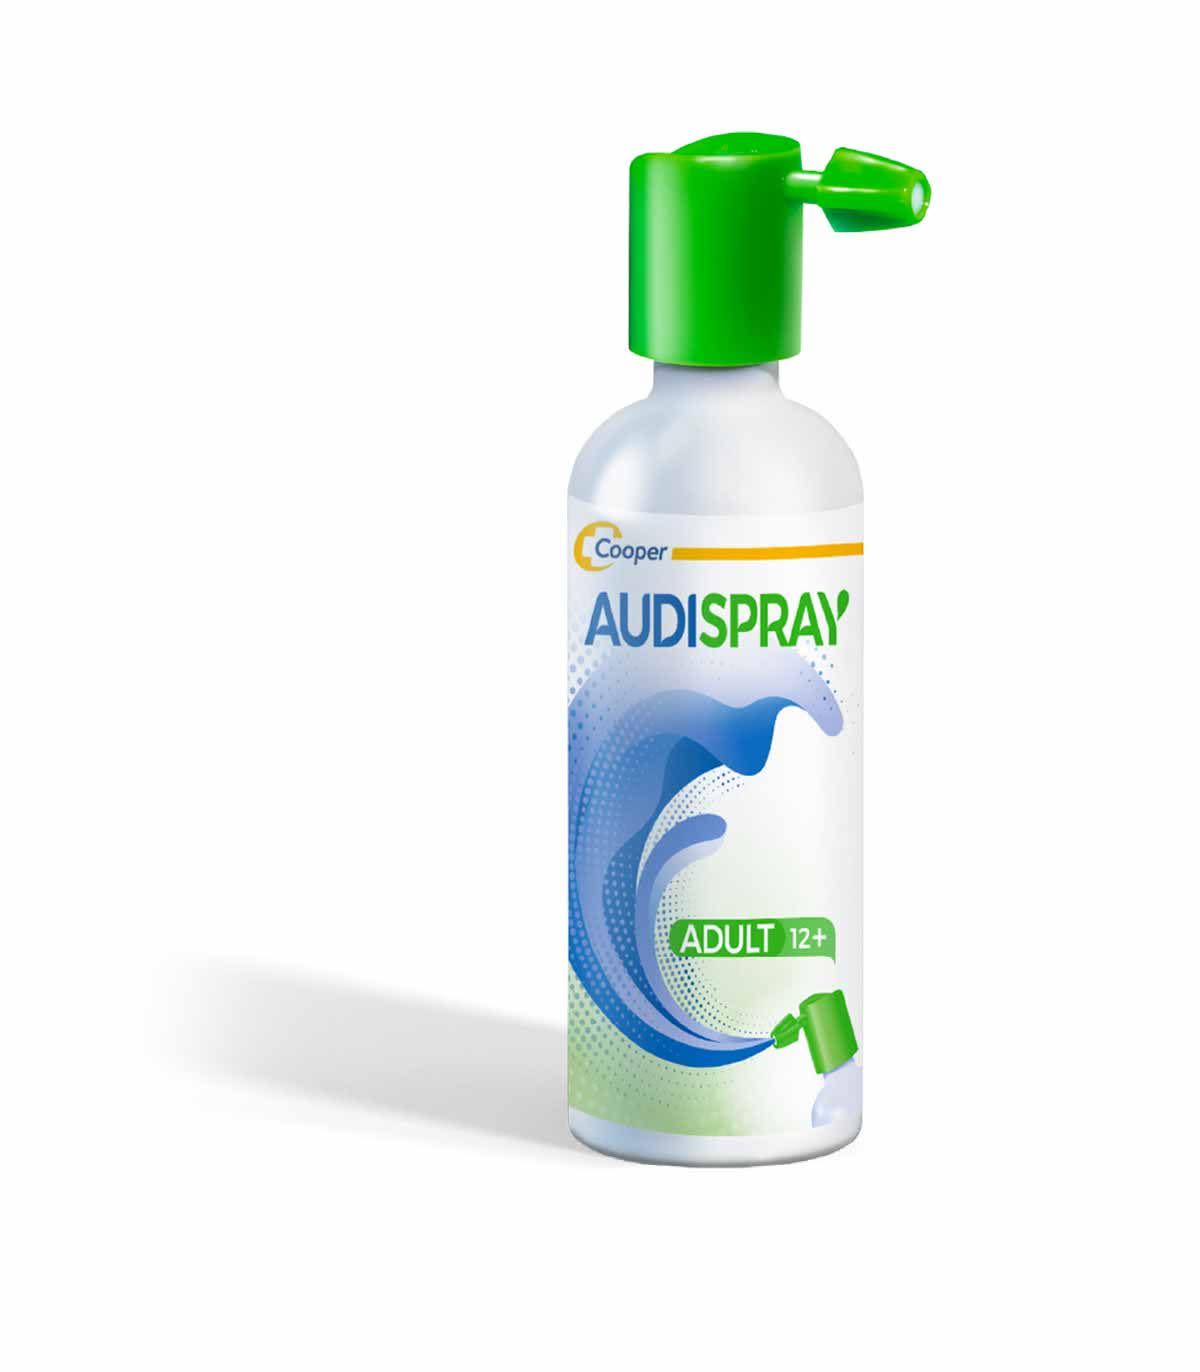 921671412 - Audispray Adult Spray Igiene Orecchio 50ml - 7871145_3.jpg